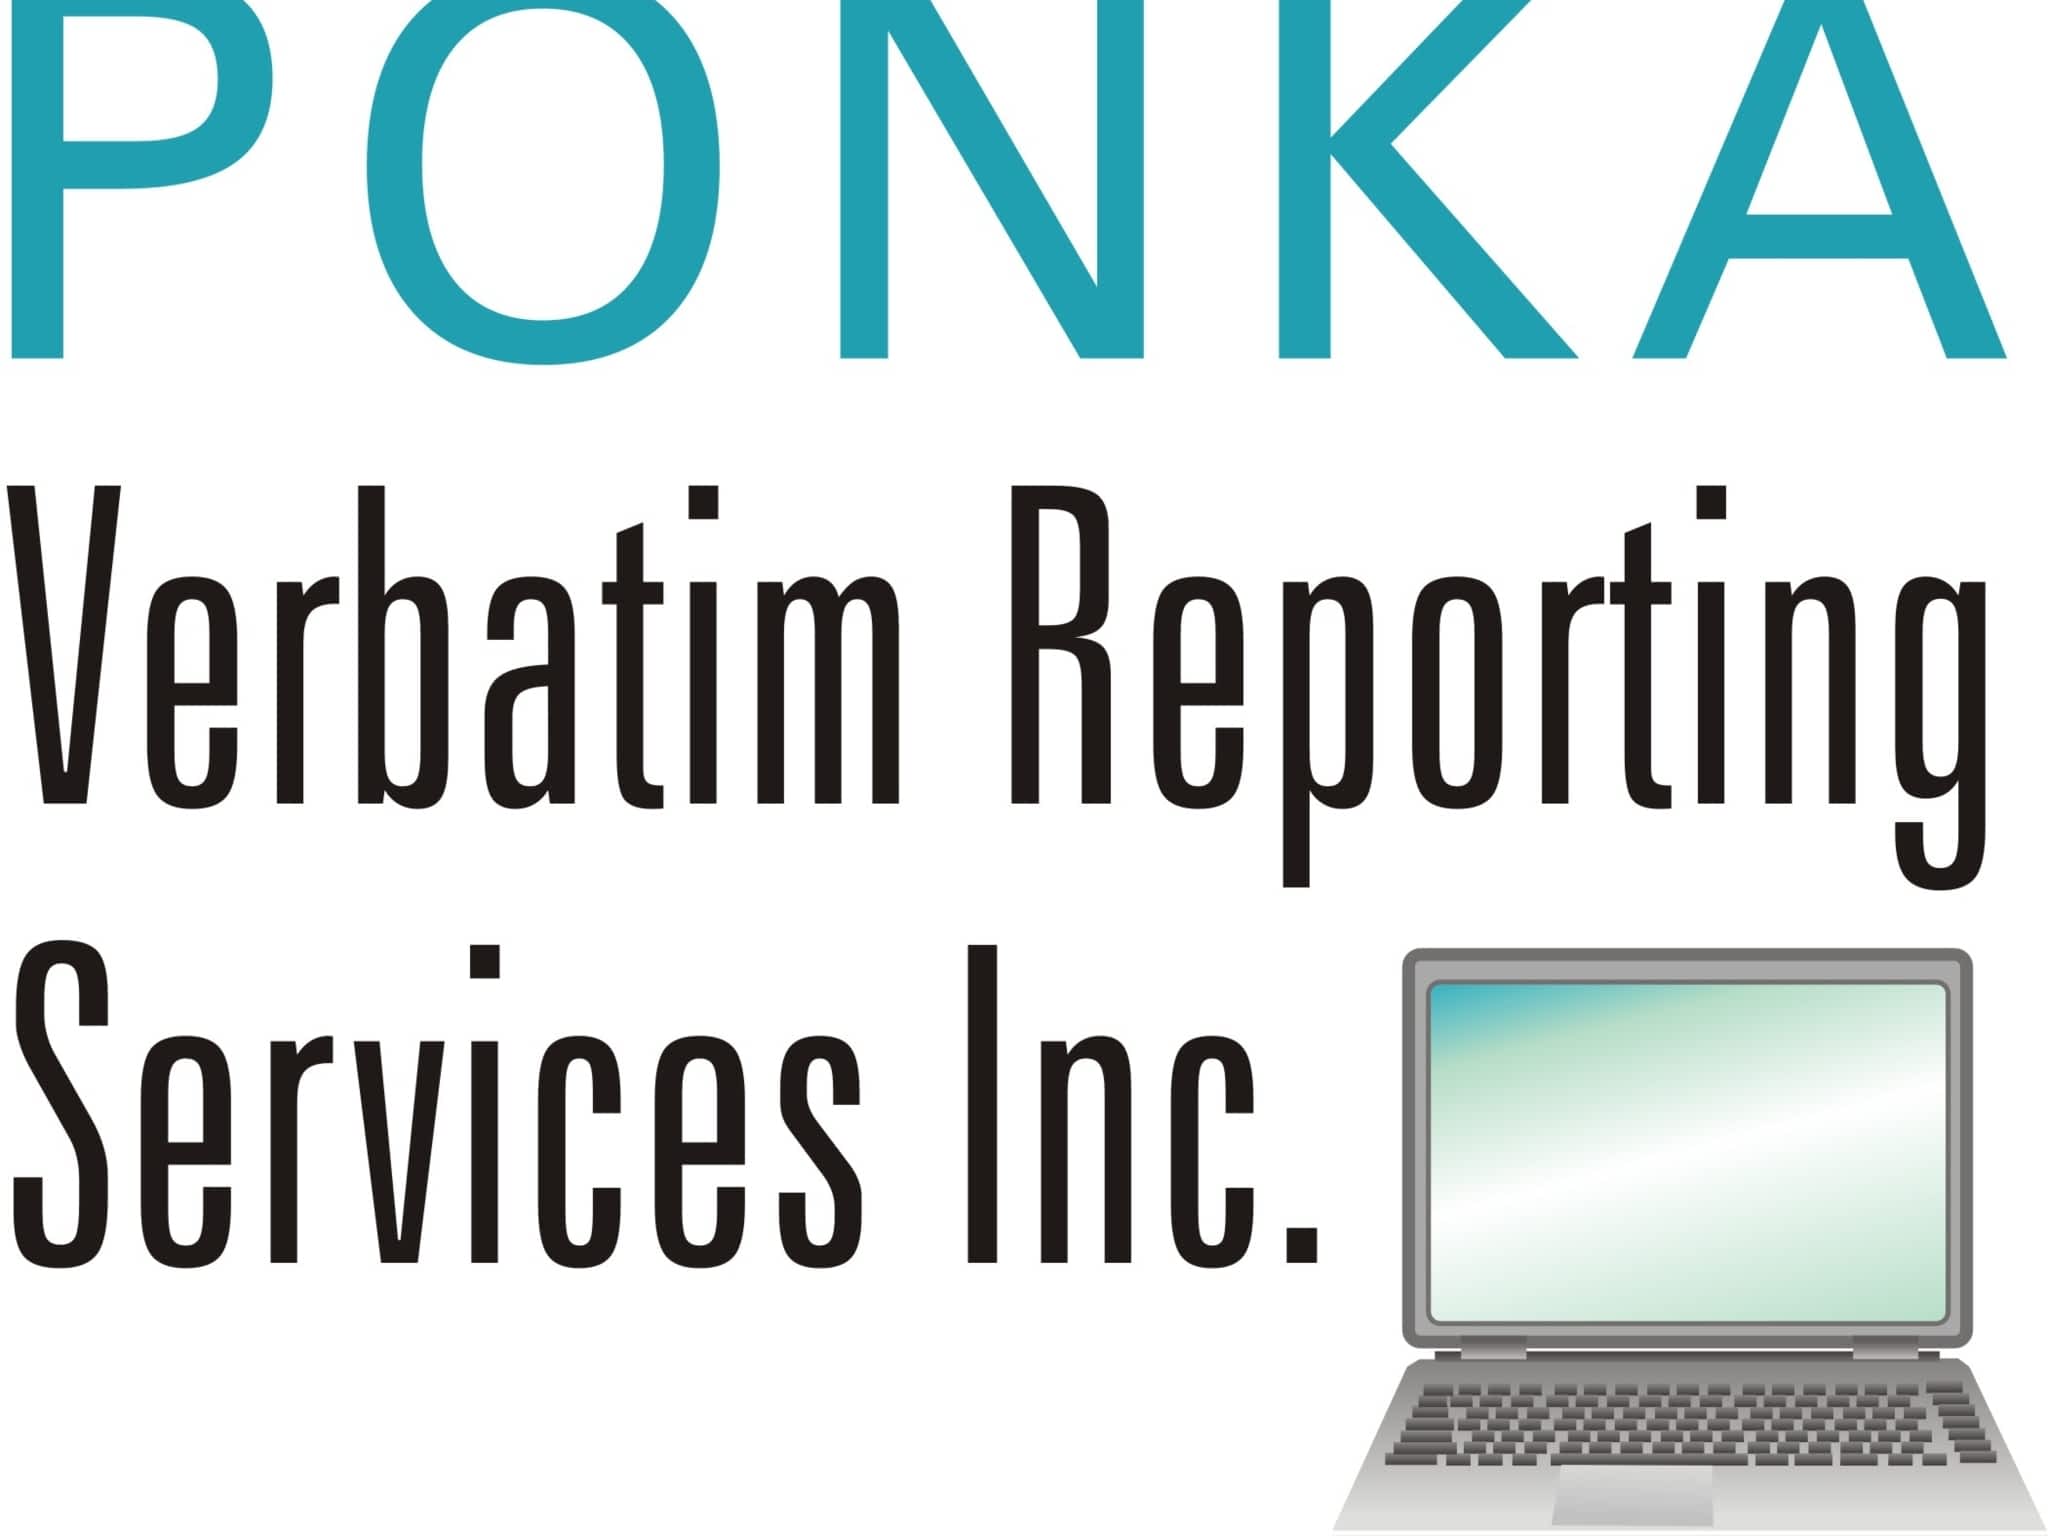 photo Ponka Verbatim Reporting Services Inc.